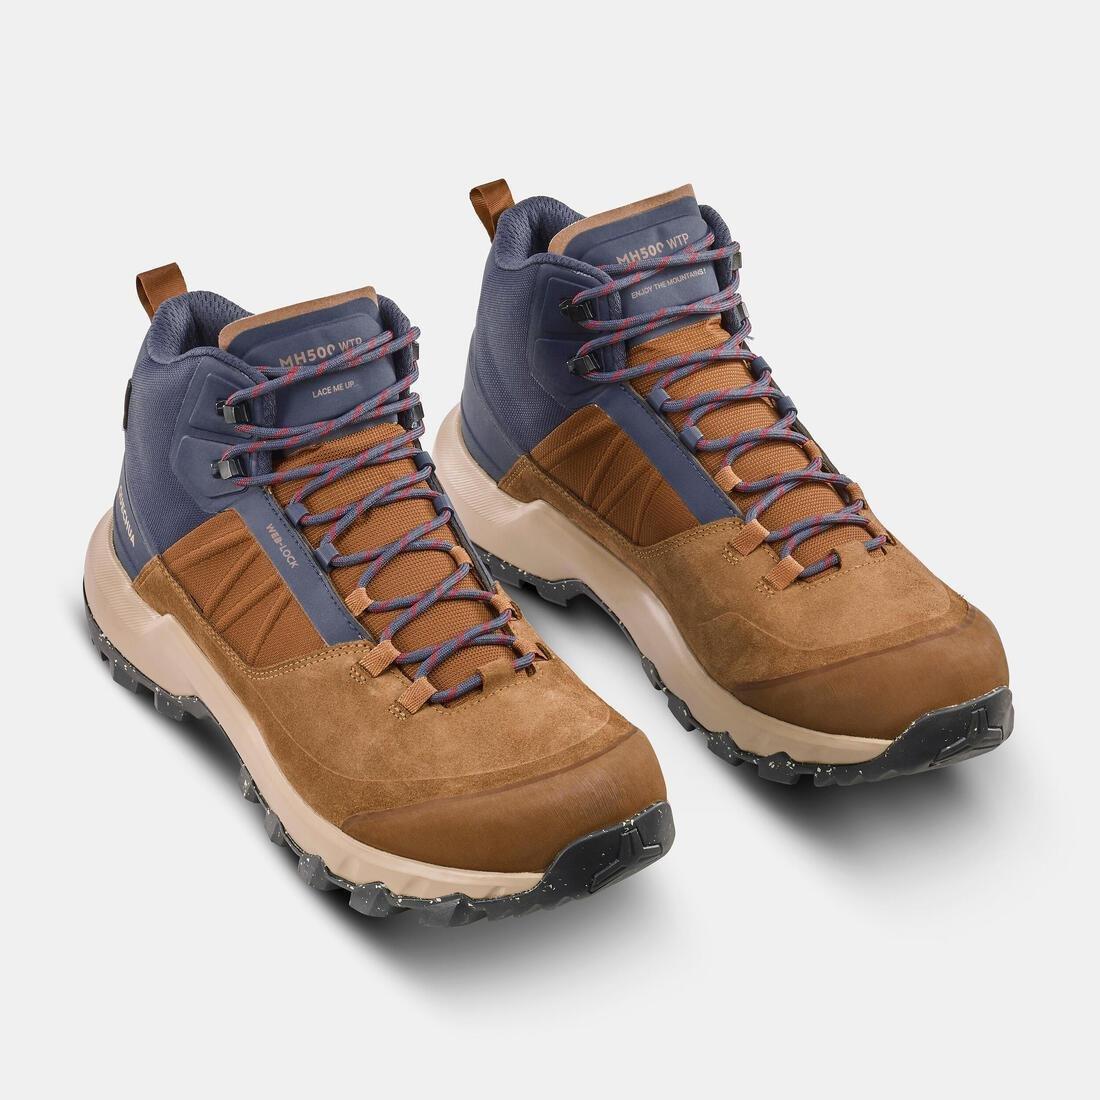 QUECHUA - Men Waterproof Mountain Walking Shoes - Mh500 Mid, Multicolour